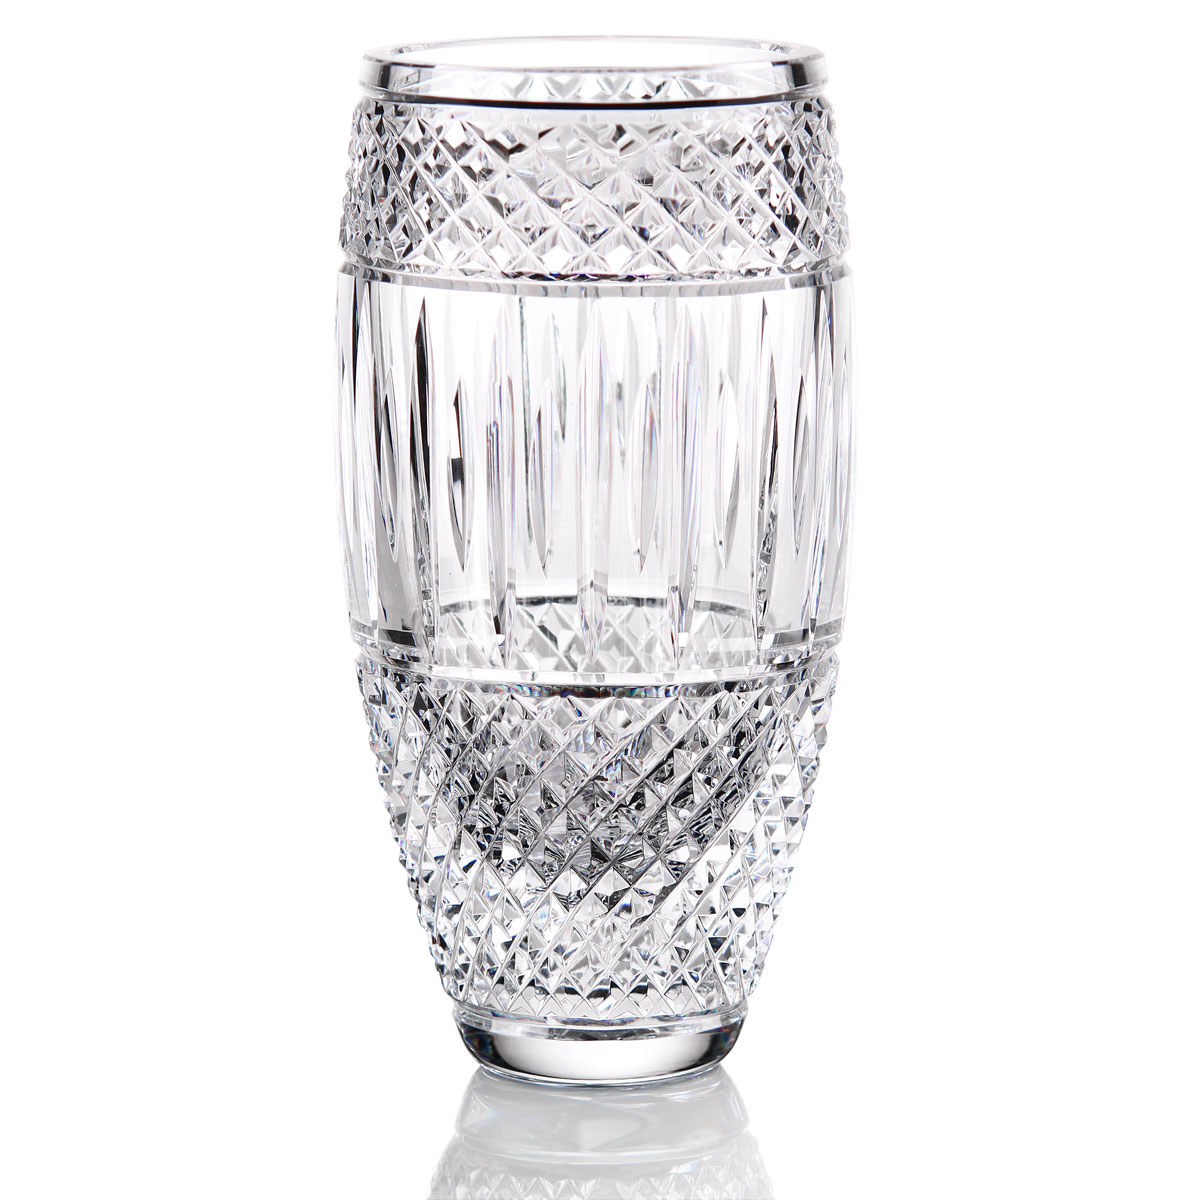 Cashs Ireland, Crystal Art Collection Cooper Classic 9" Barrel Vase